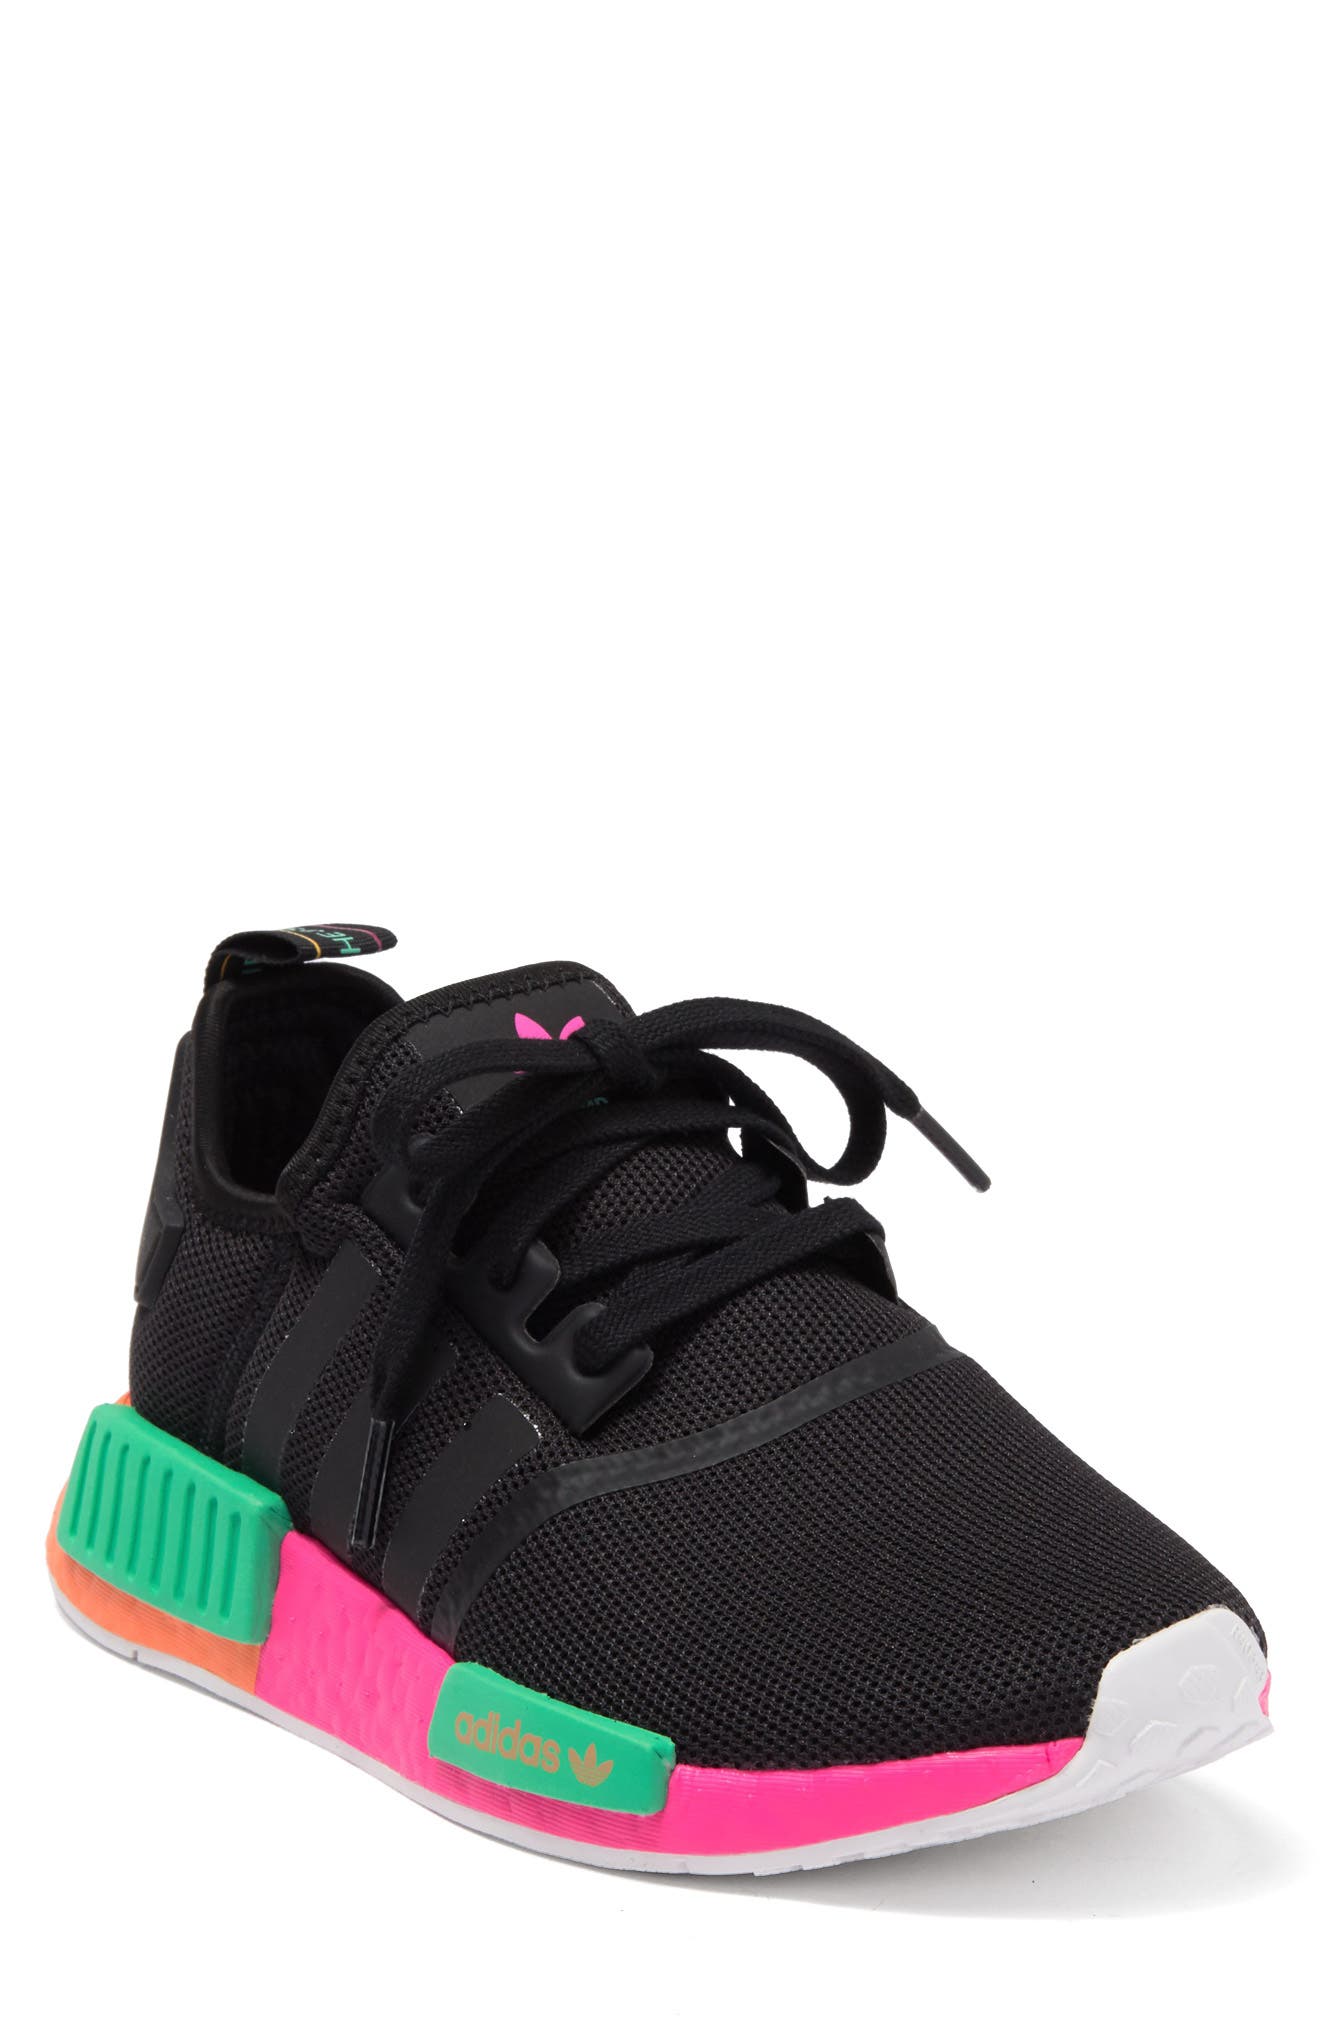 Adidas Originals Nmd R1 Sneaker In Core Black/core Black